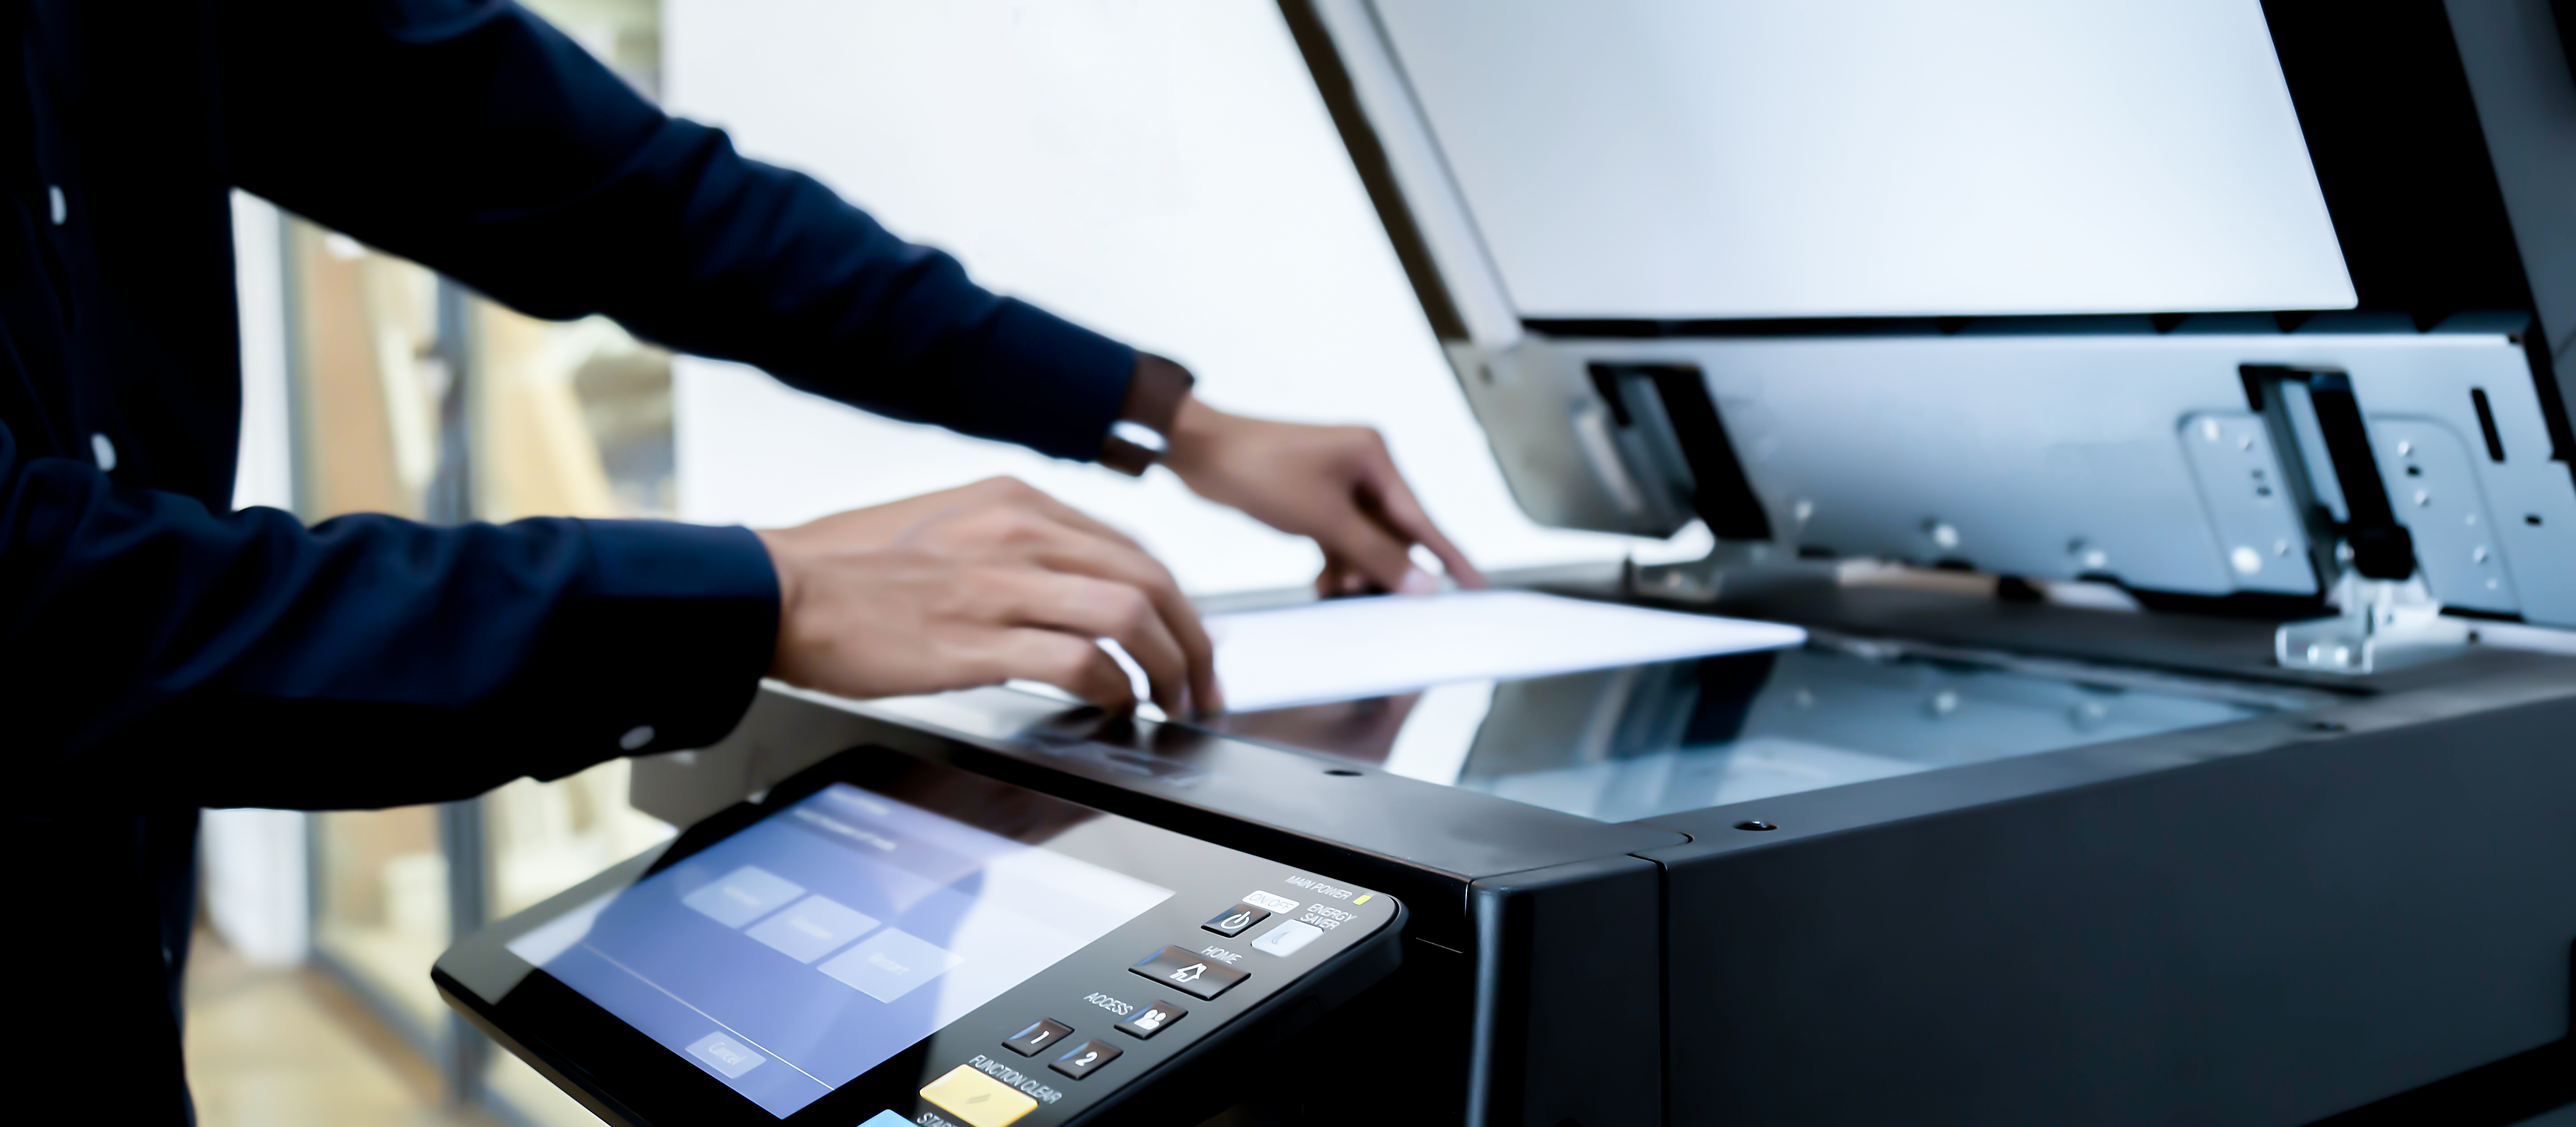 photocopy machines